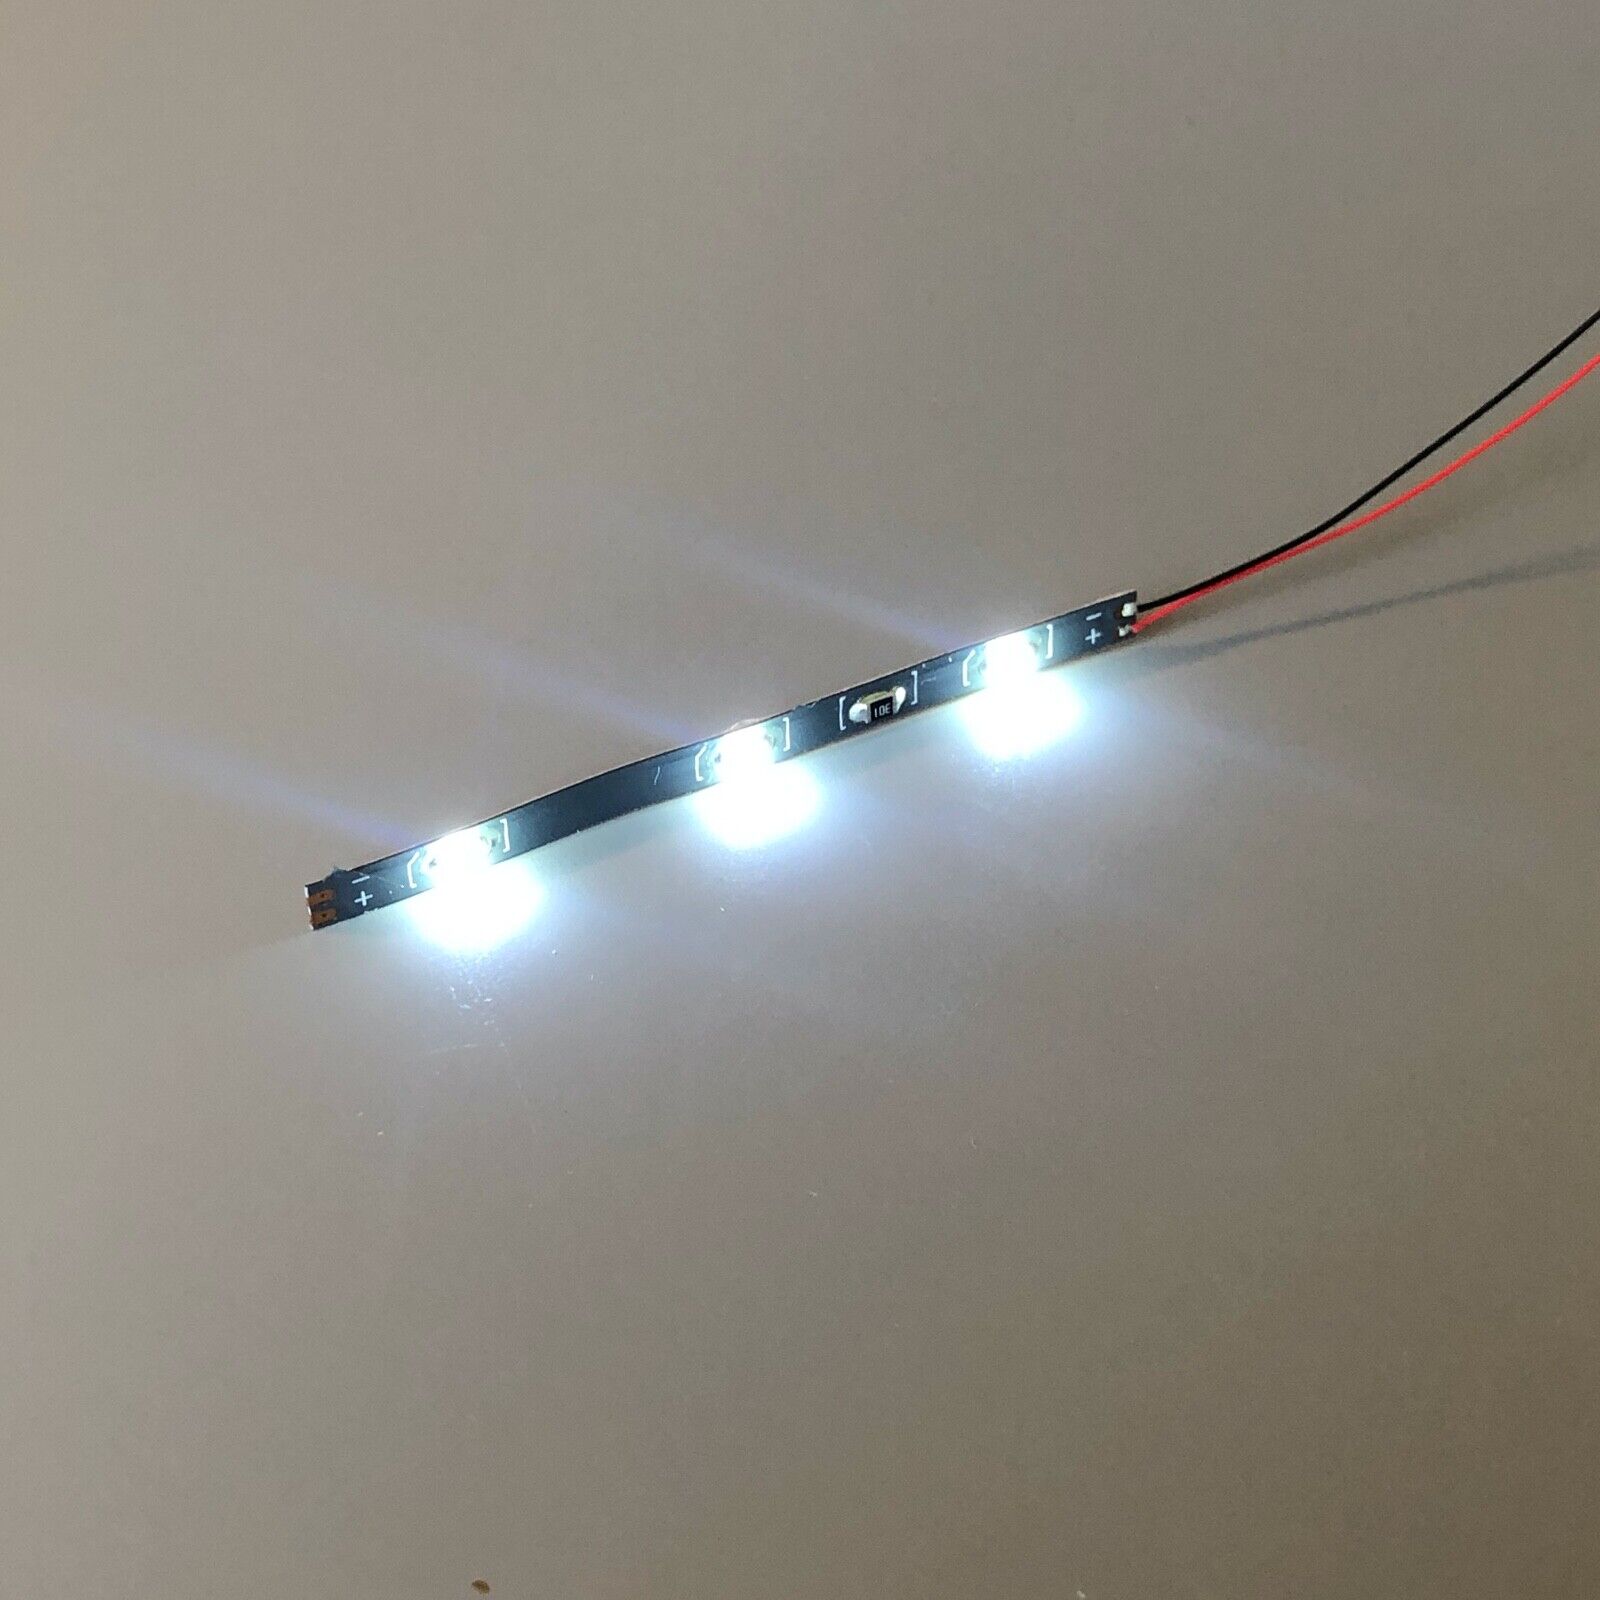 UK 12v Miniature LED Strip light for Model Railway Interior -Bright / Warm White